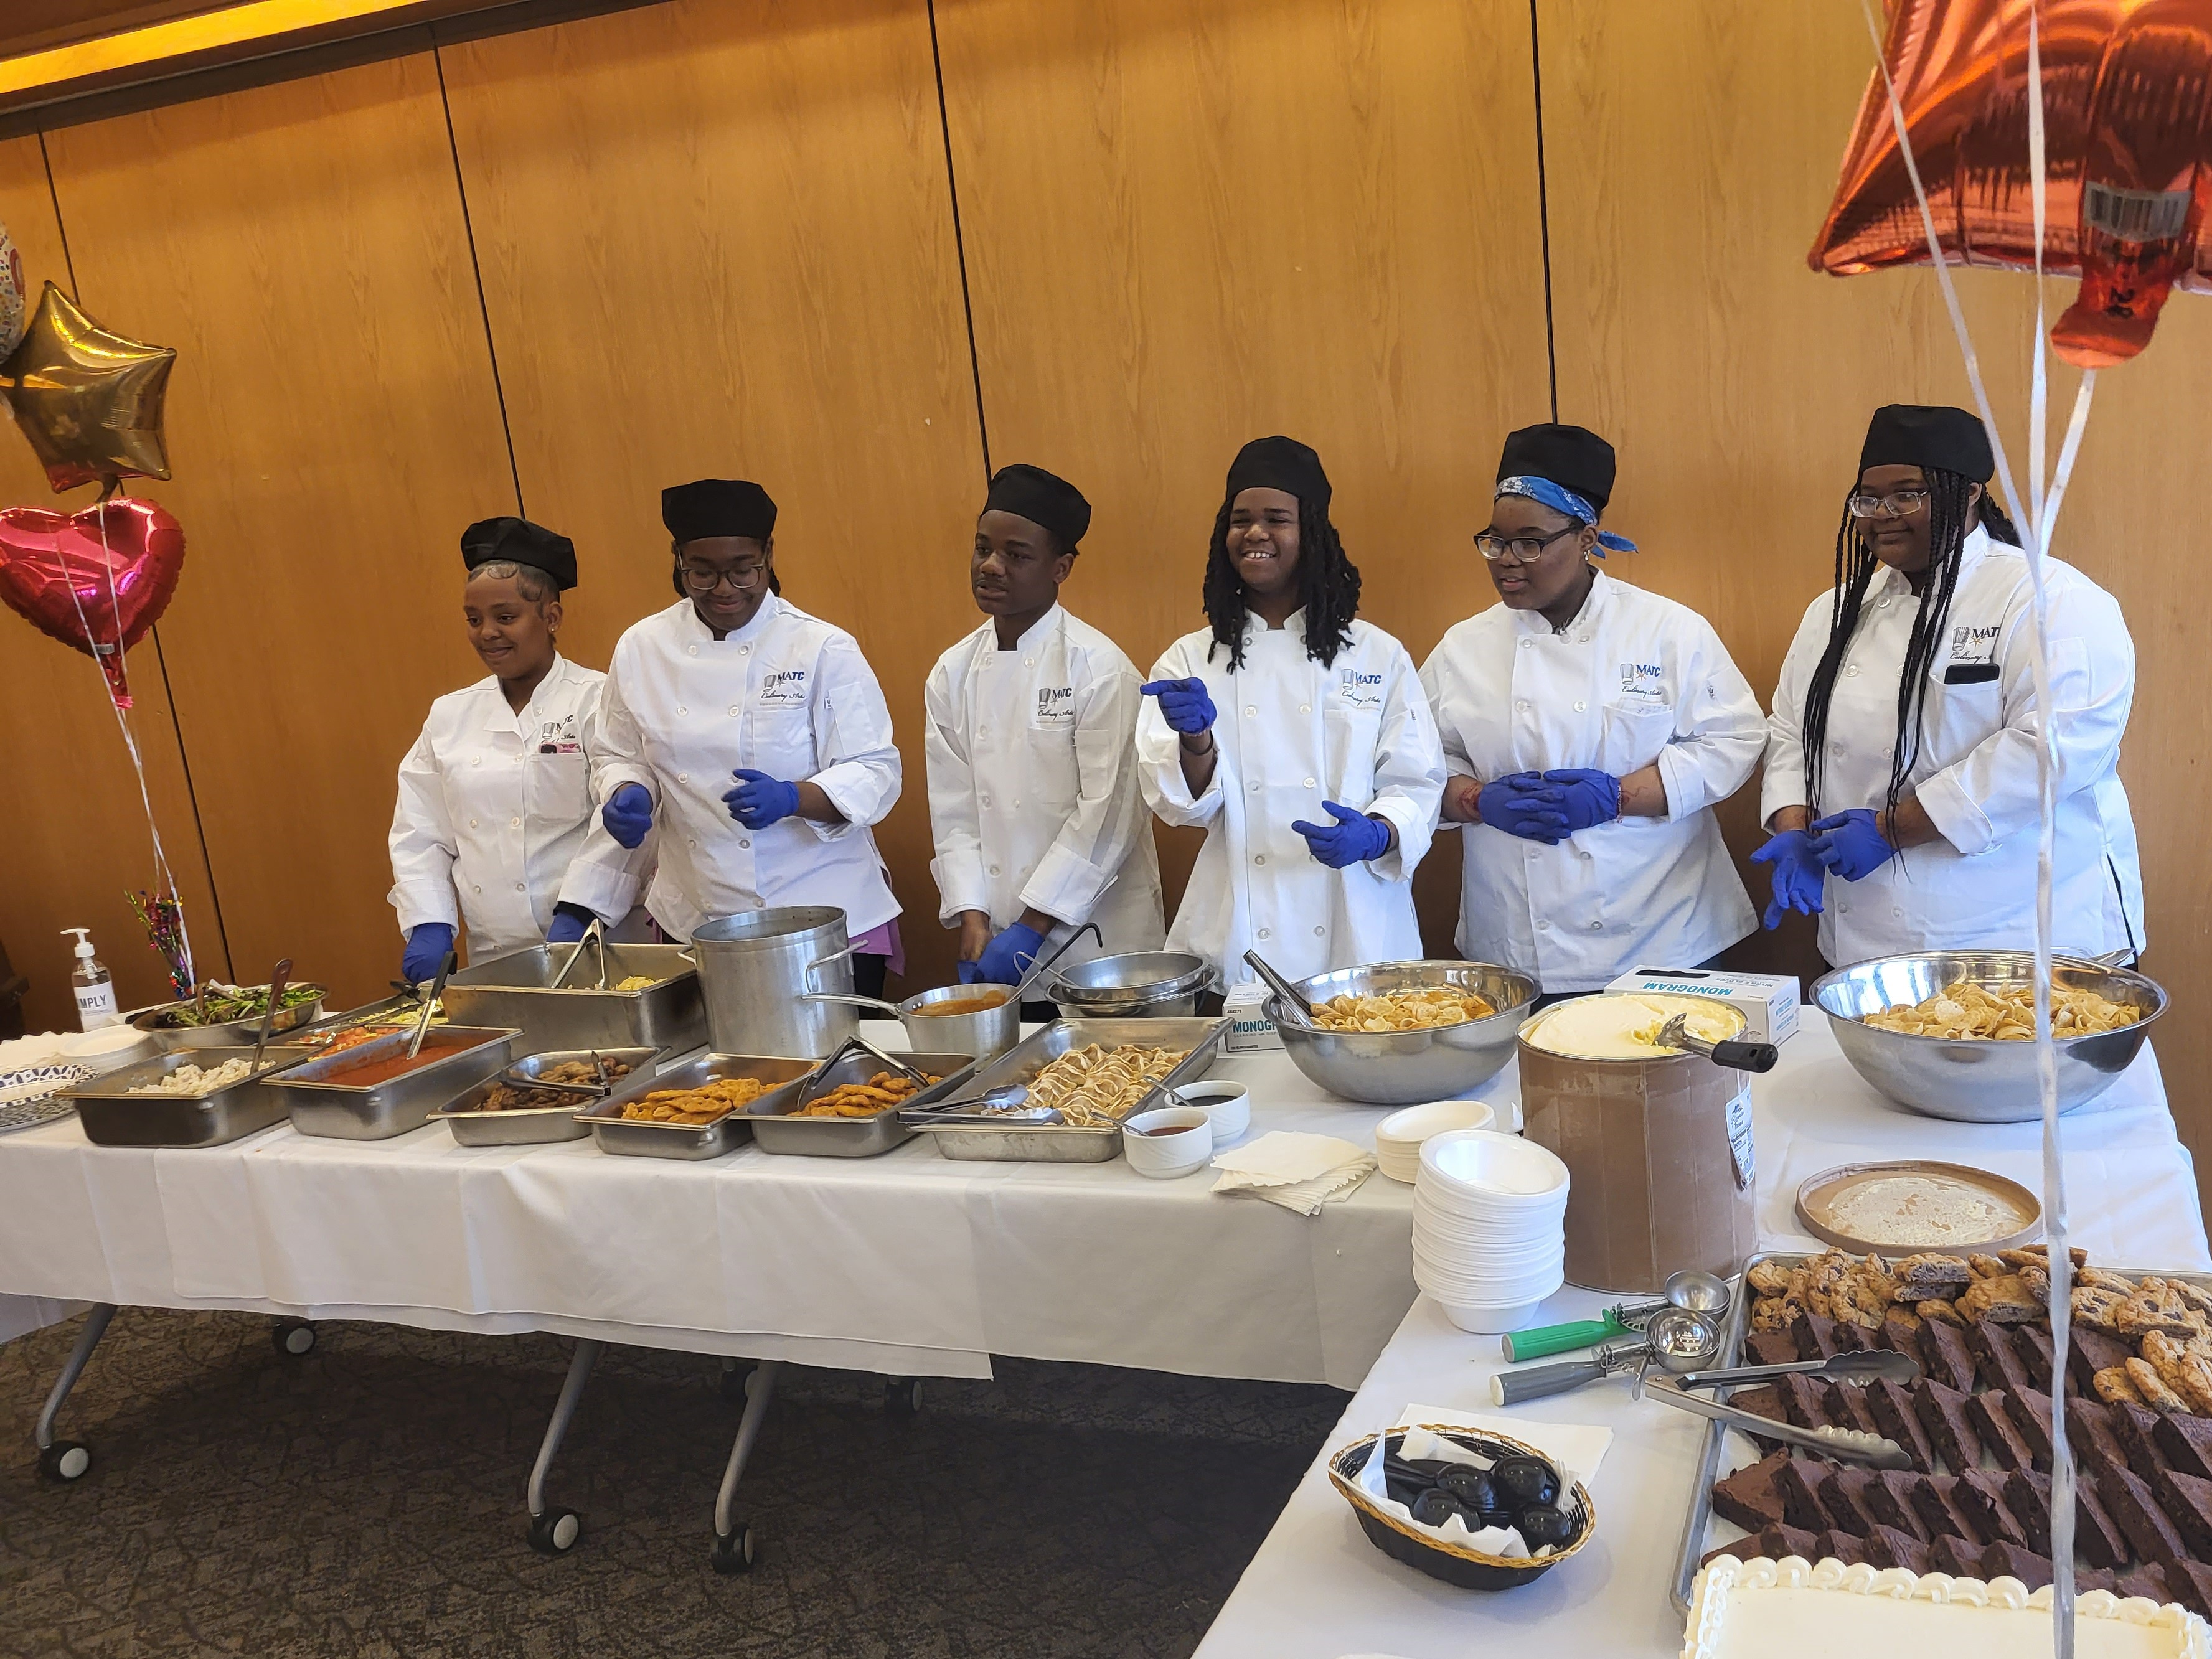 Teen Culinary Arts Program